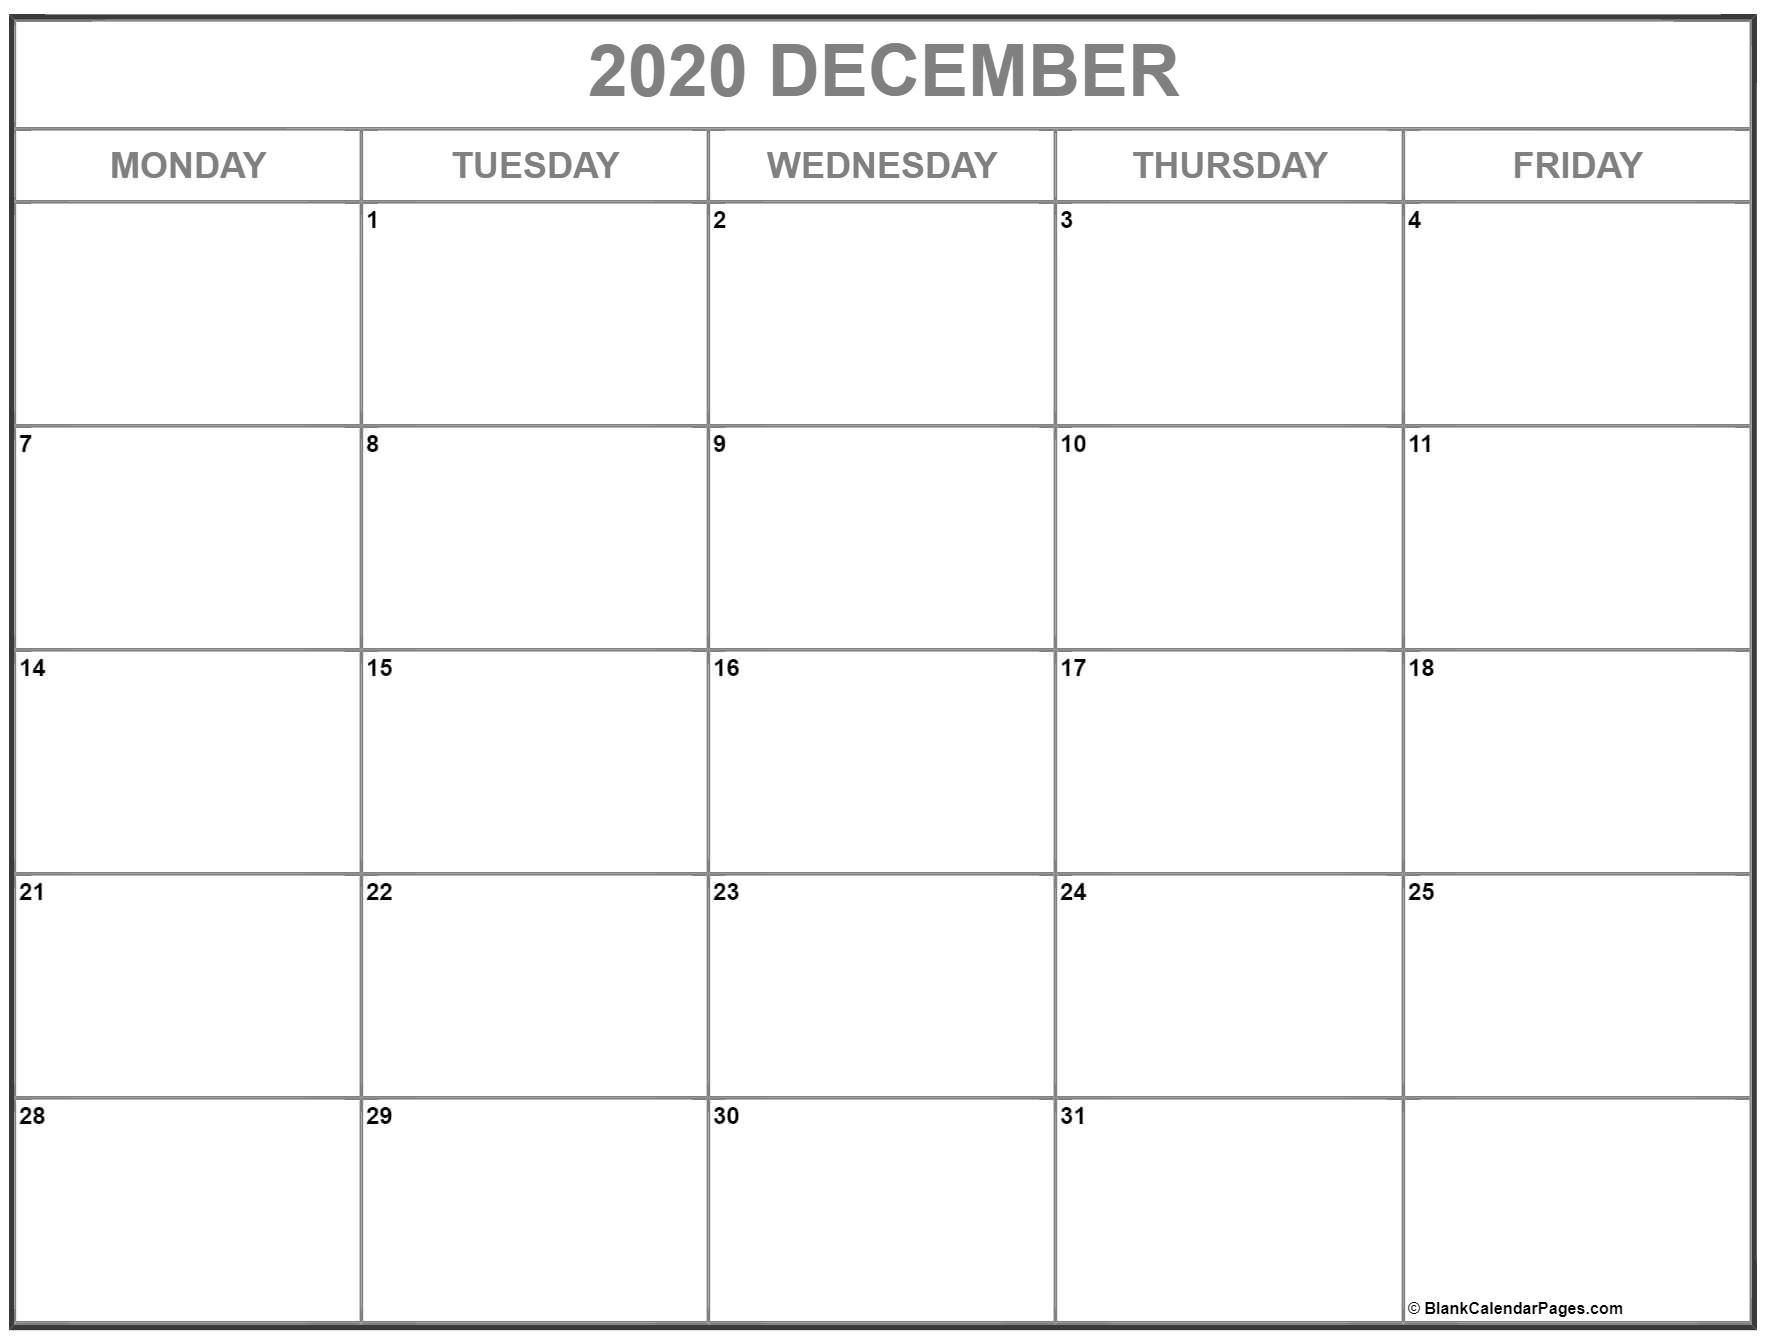 December 2020 Monday Calendar | Monday To Sunday